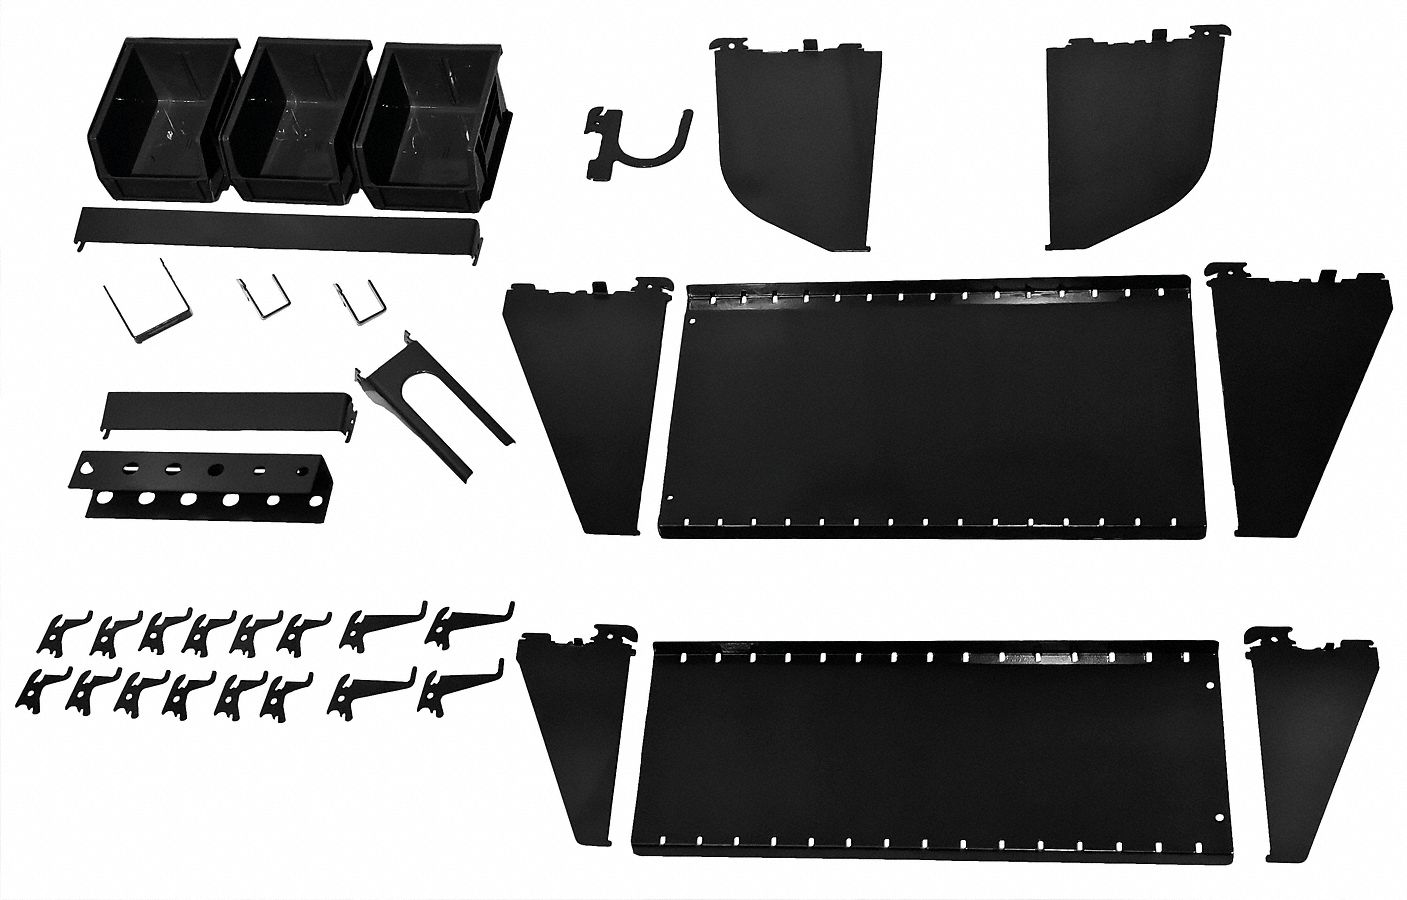 Toolboard Accessory Kit: 17 Hooks, 3 Bins, Black